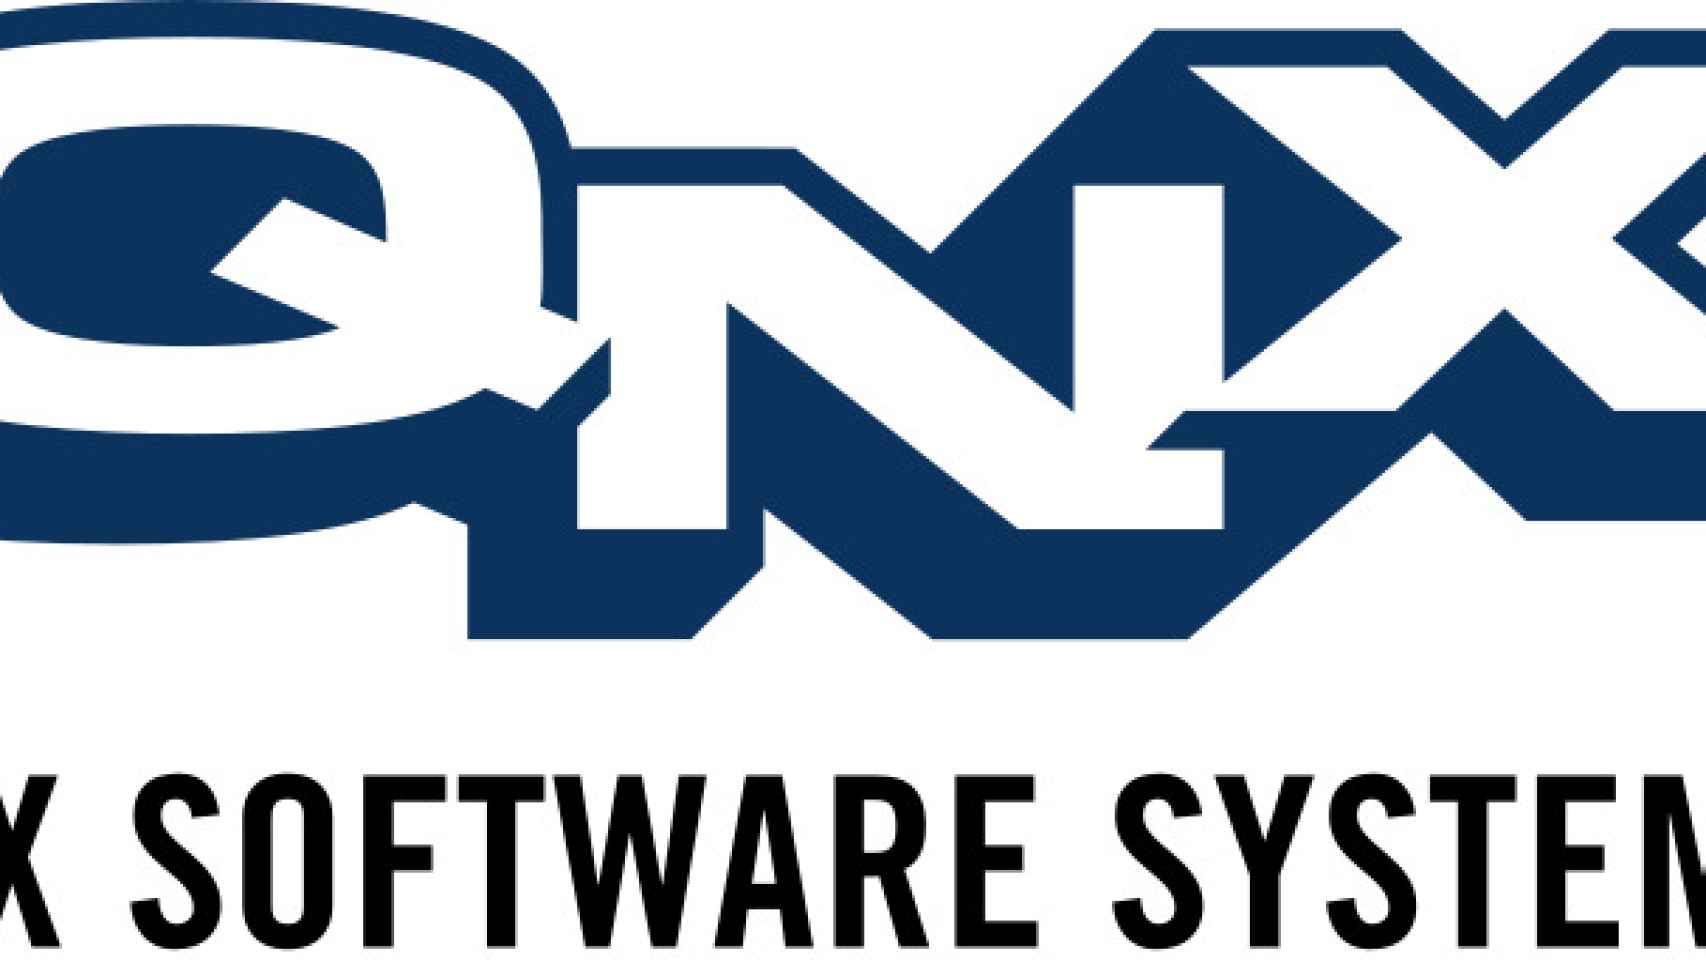 QNX-Logo